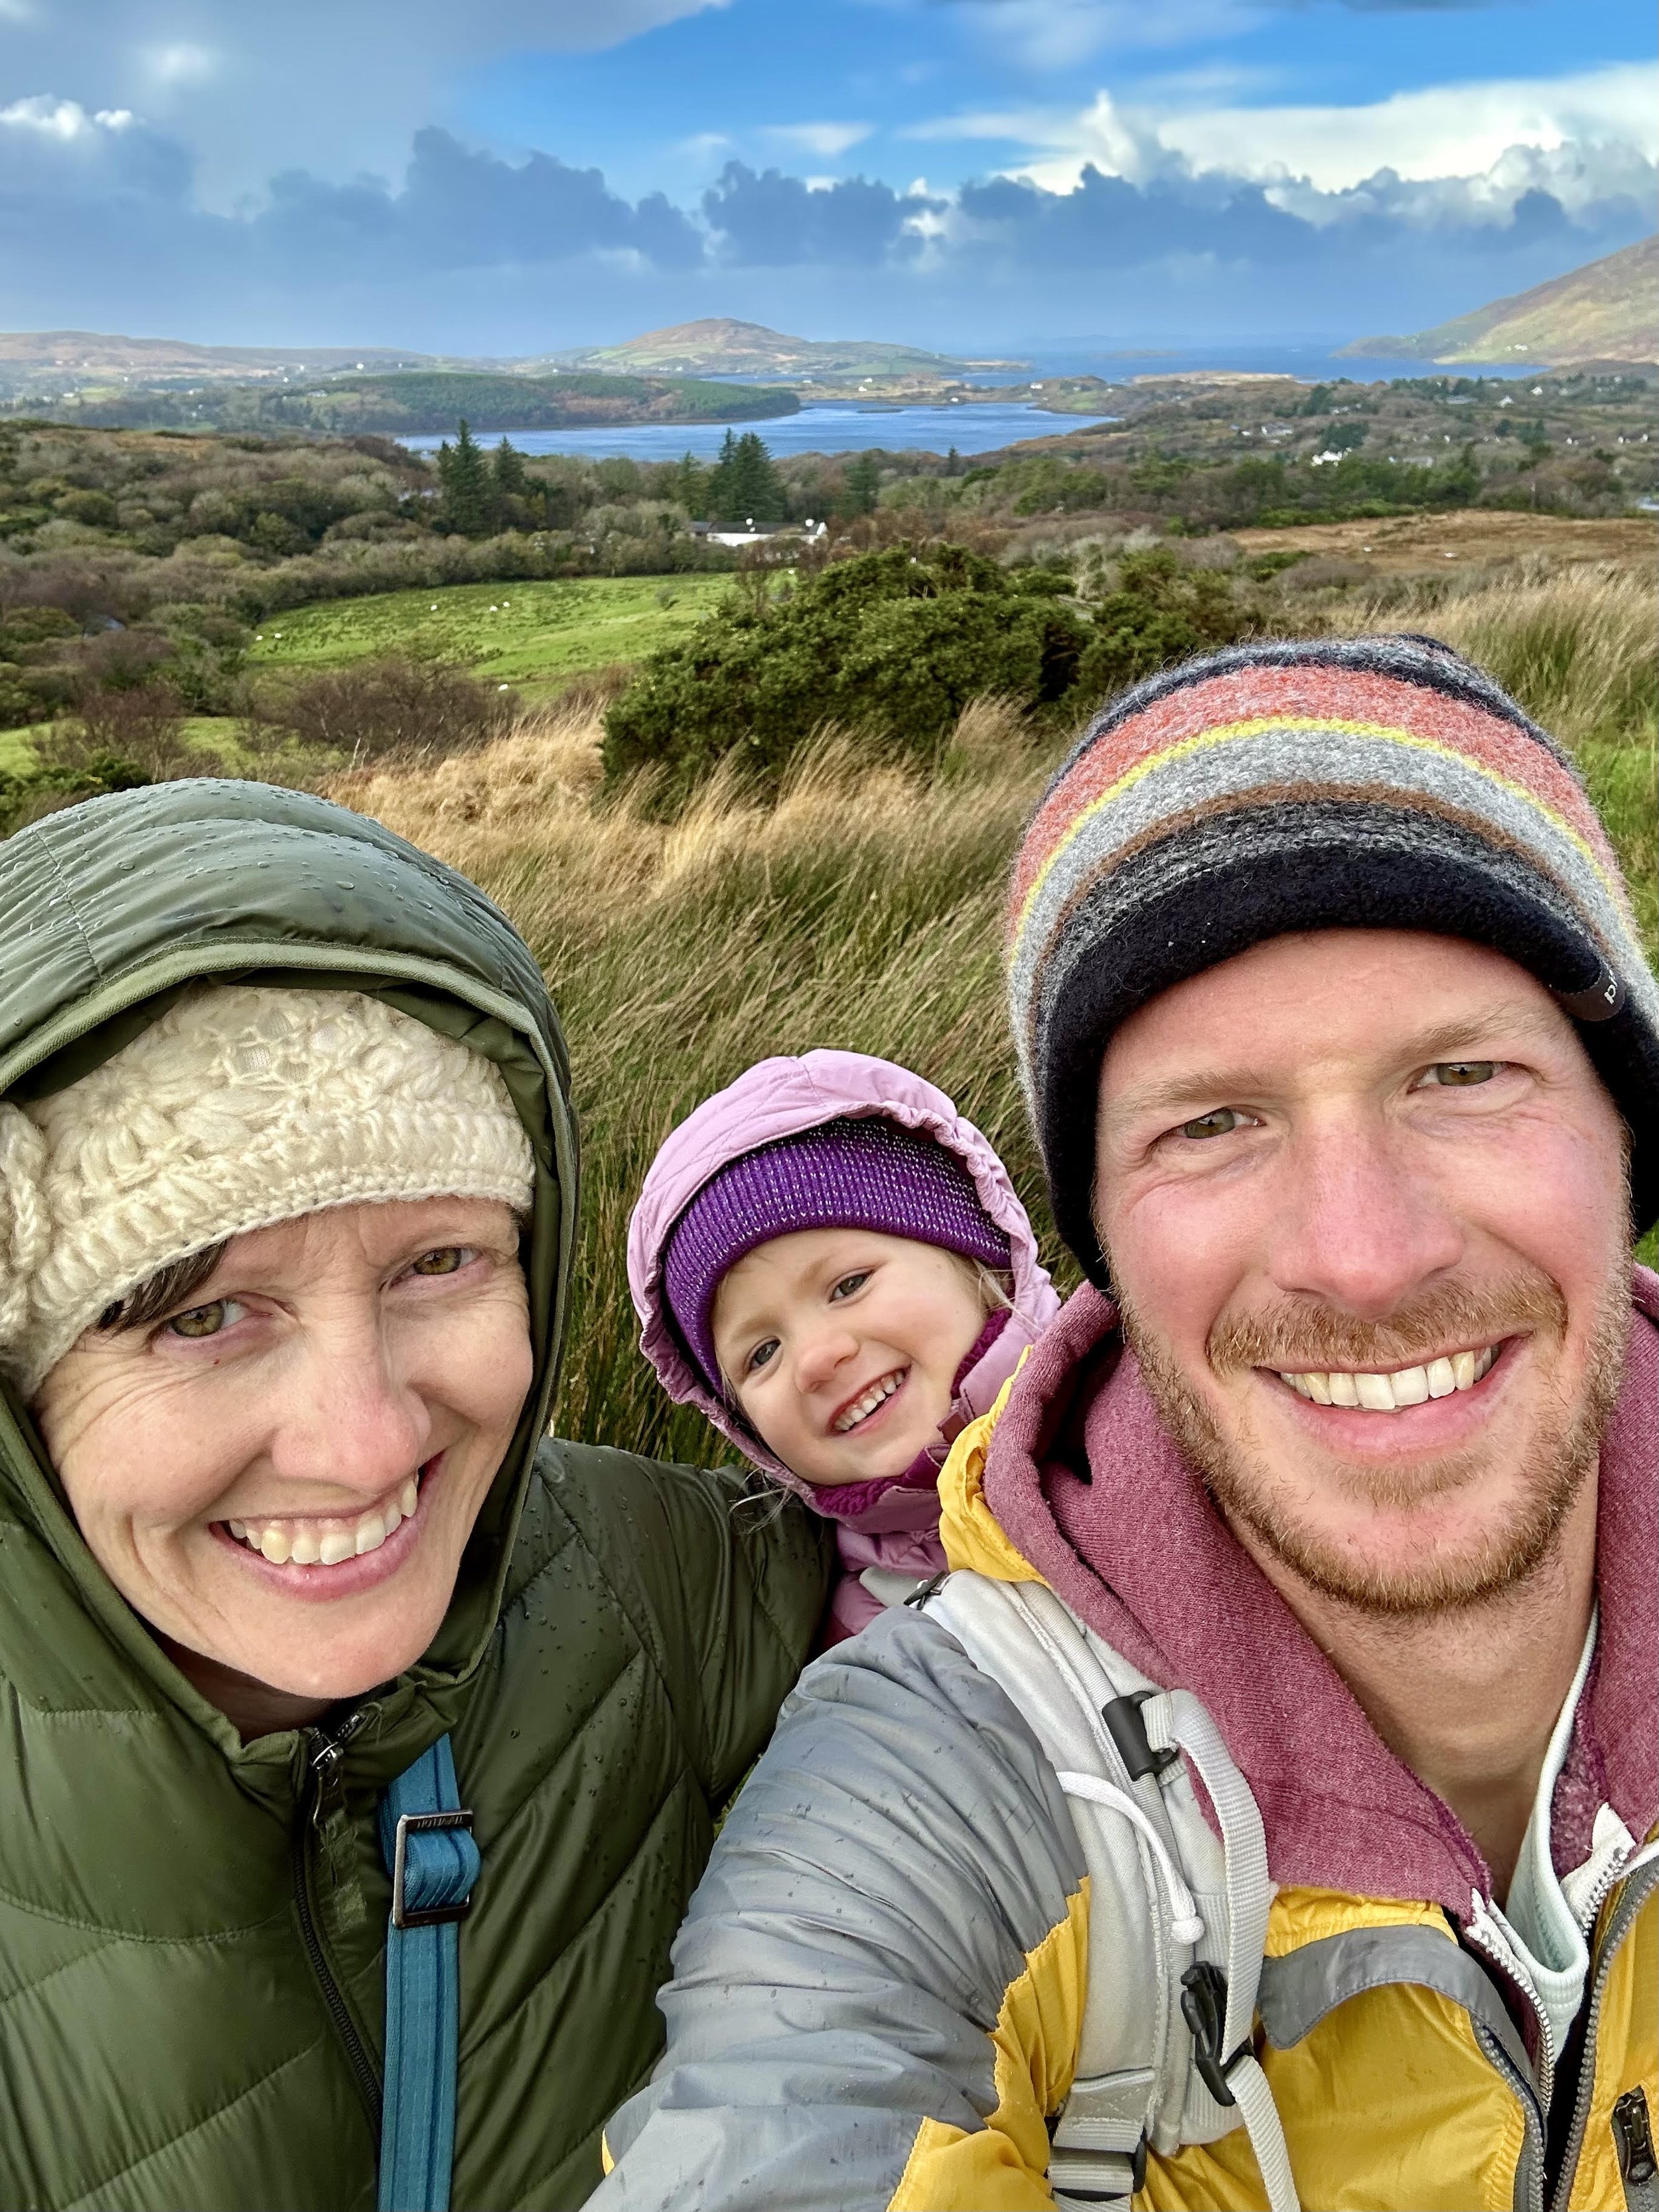 Steve M. and Family in Connemara National Park in Ireland